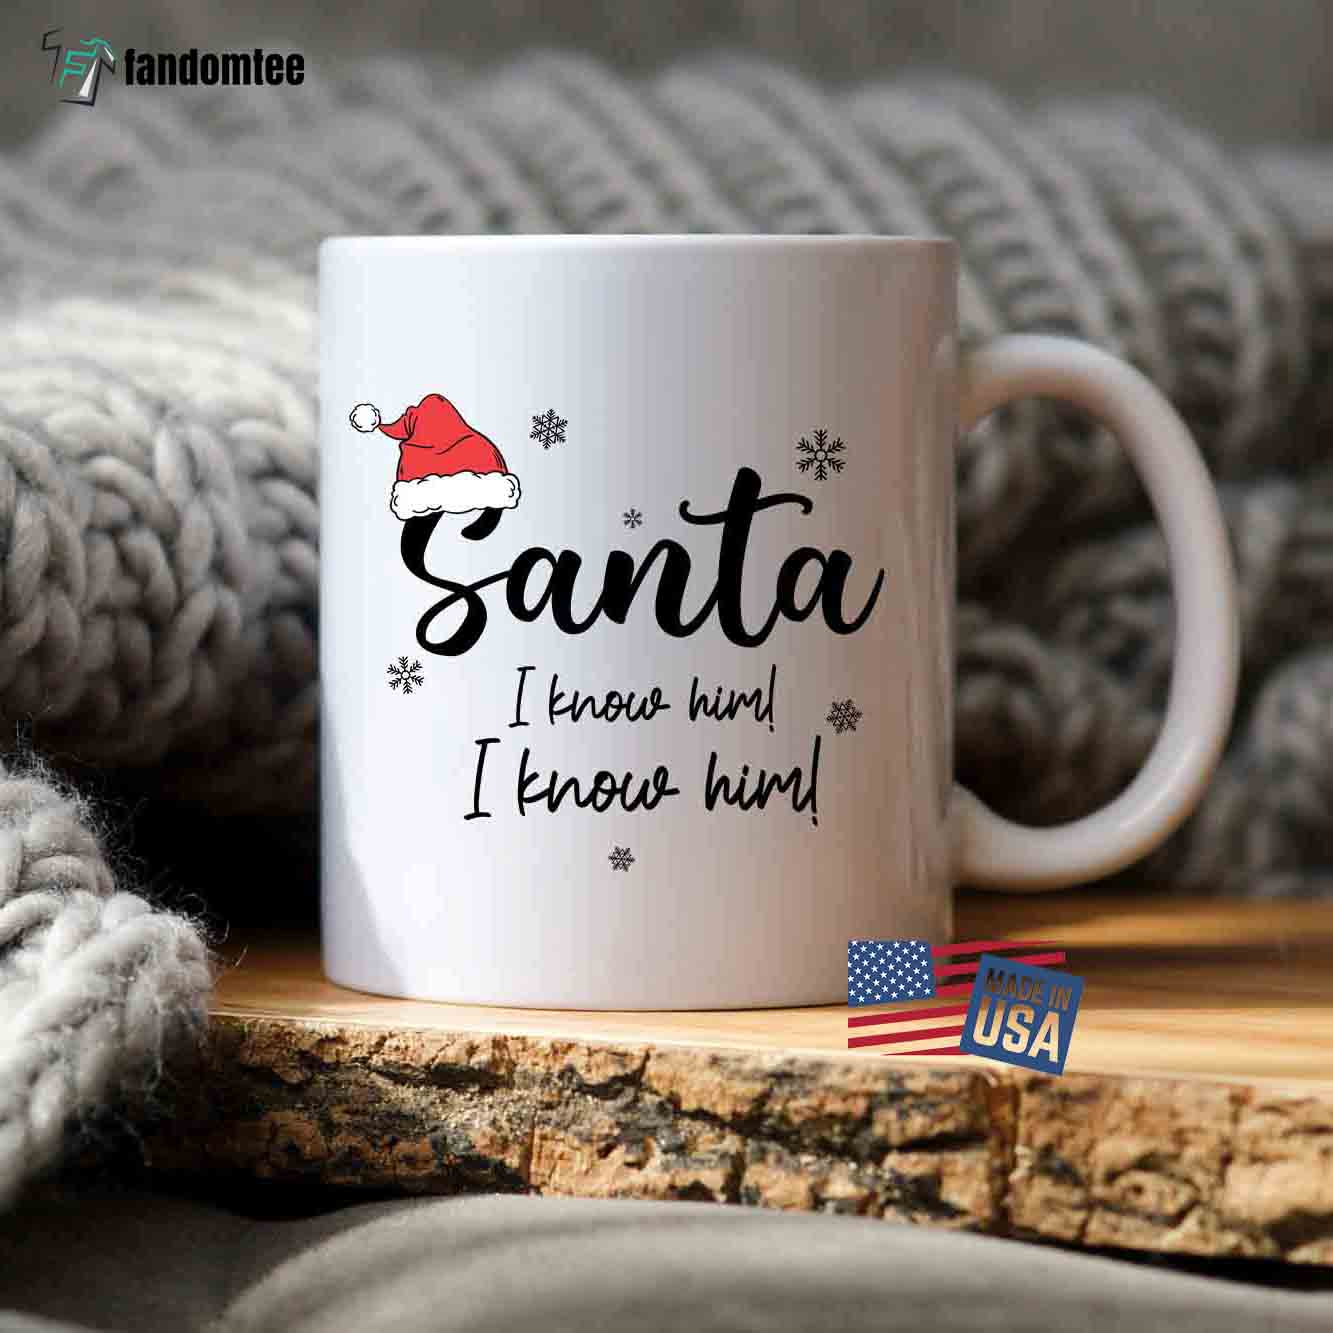 Funny Elf Santa Knows Him Christmas Front & Back Coffee Mug